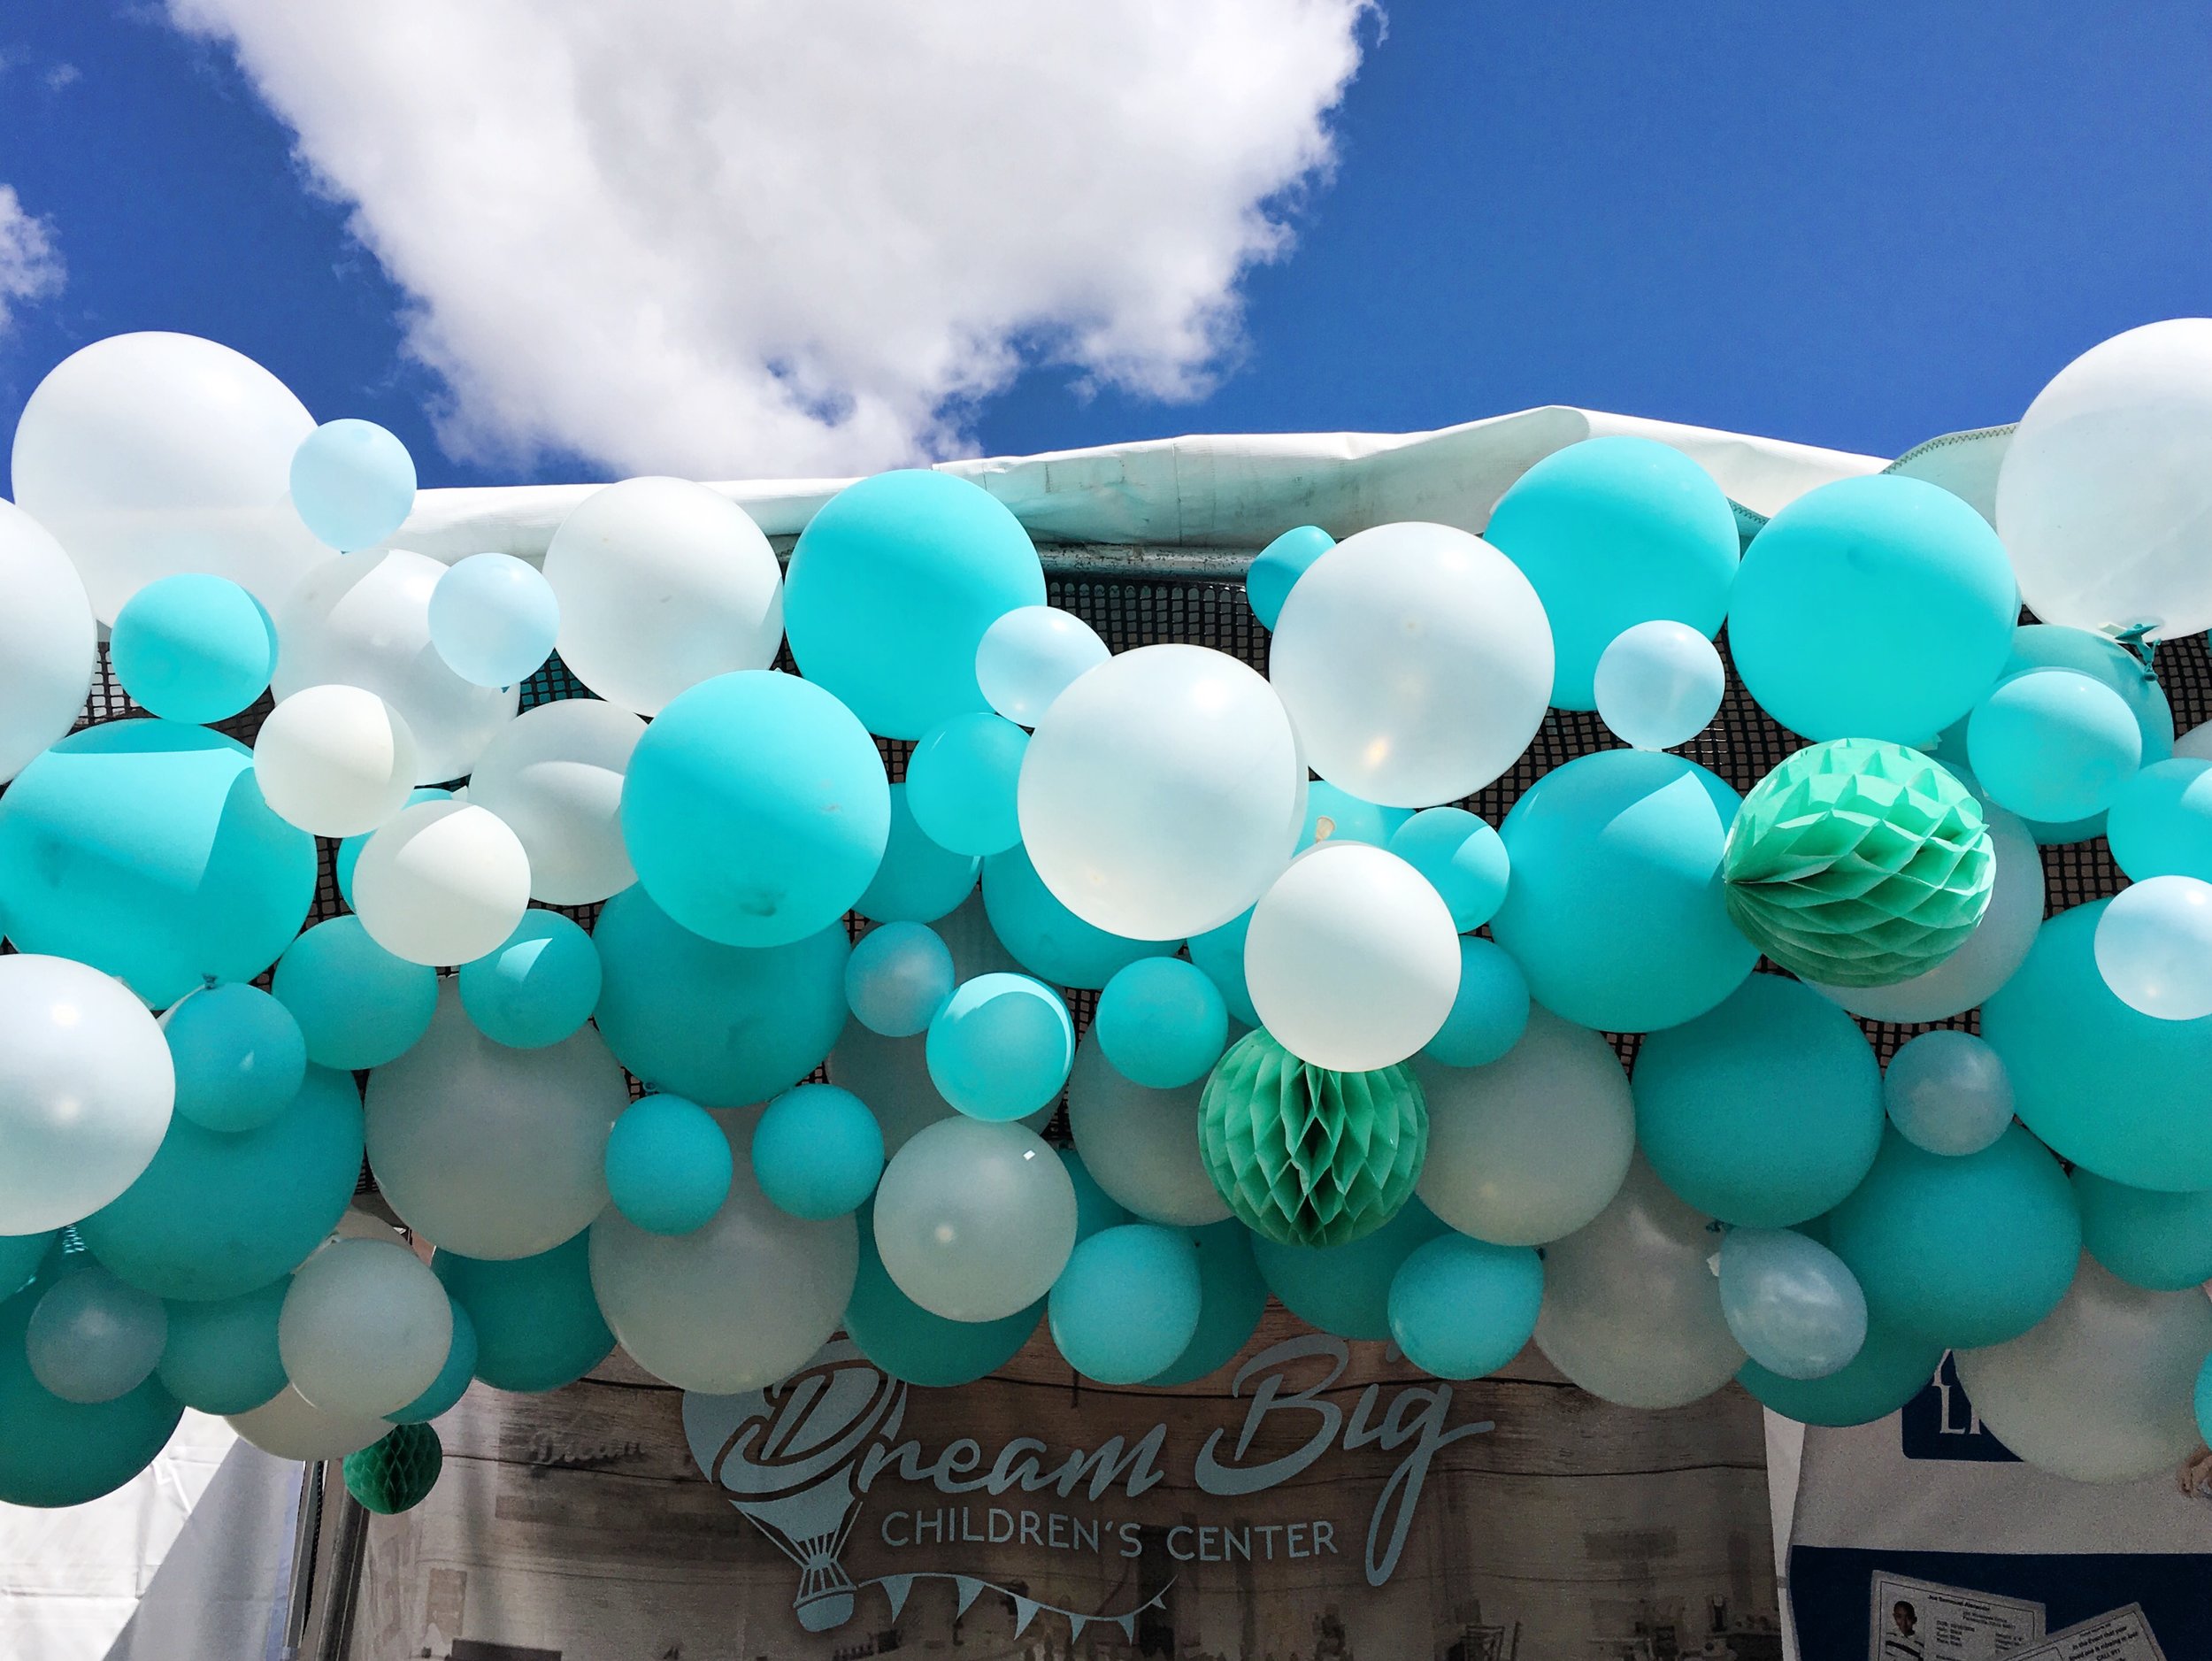 Balloon display by Dream Big Children's Center based in Monrovia, CA.